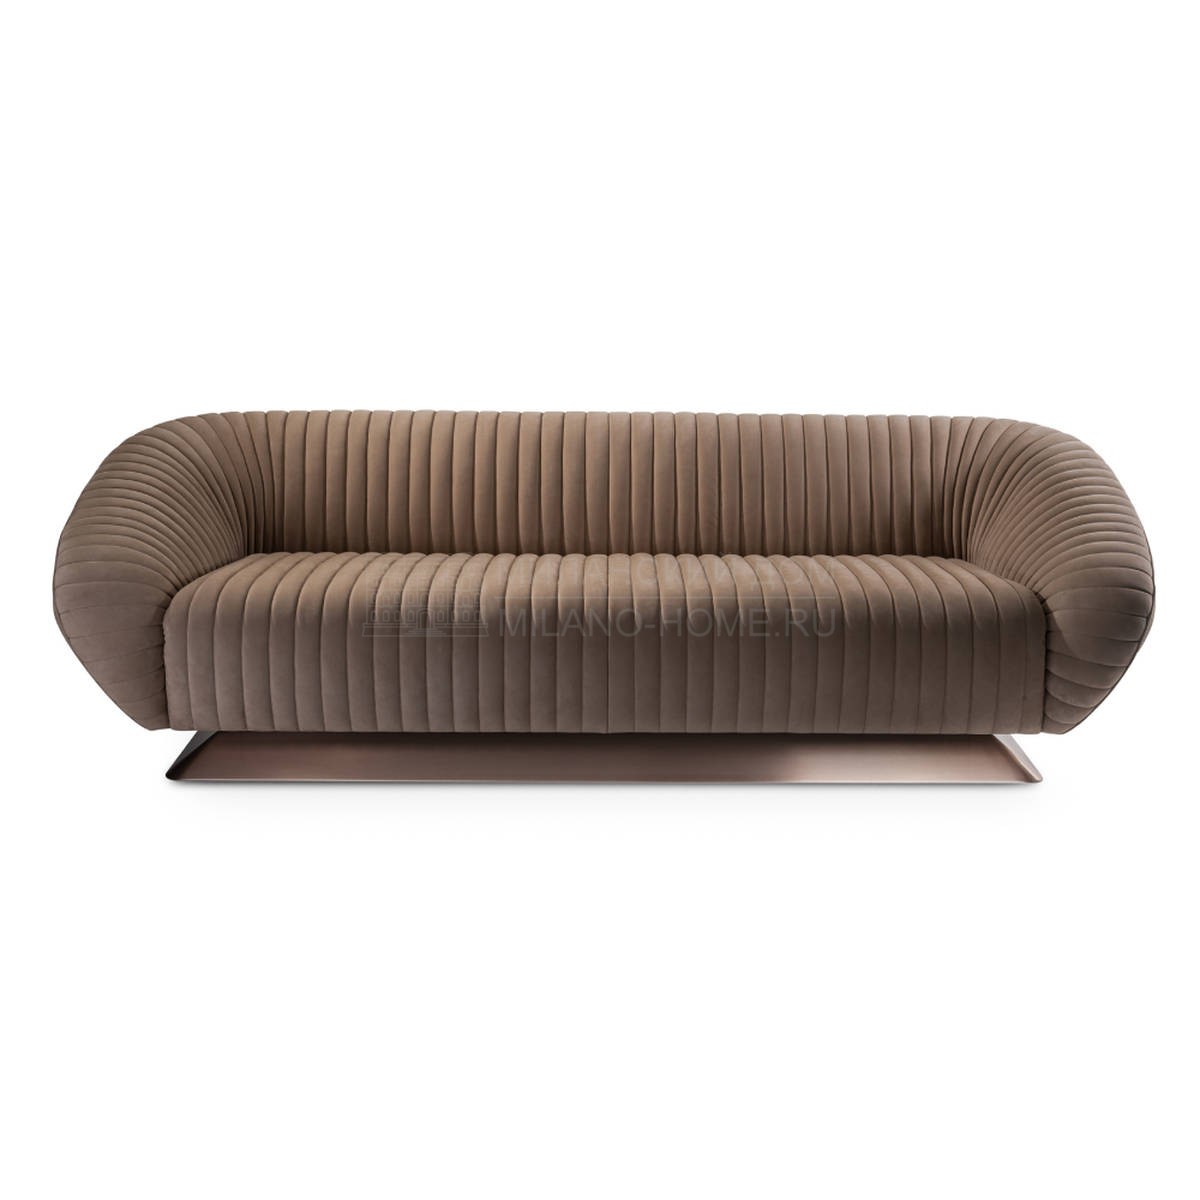 Прямой диван Citizen sofa из Италии фабрики IPE CAVALLI VISIONNAIRE